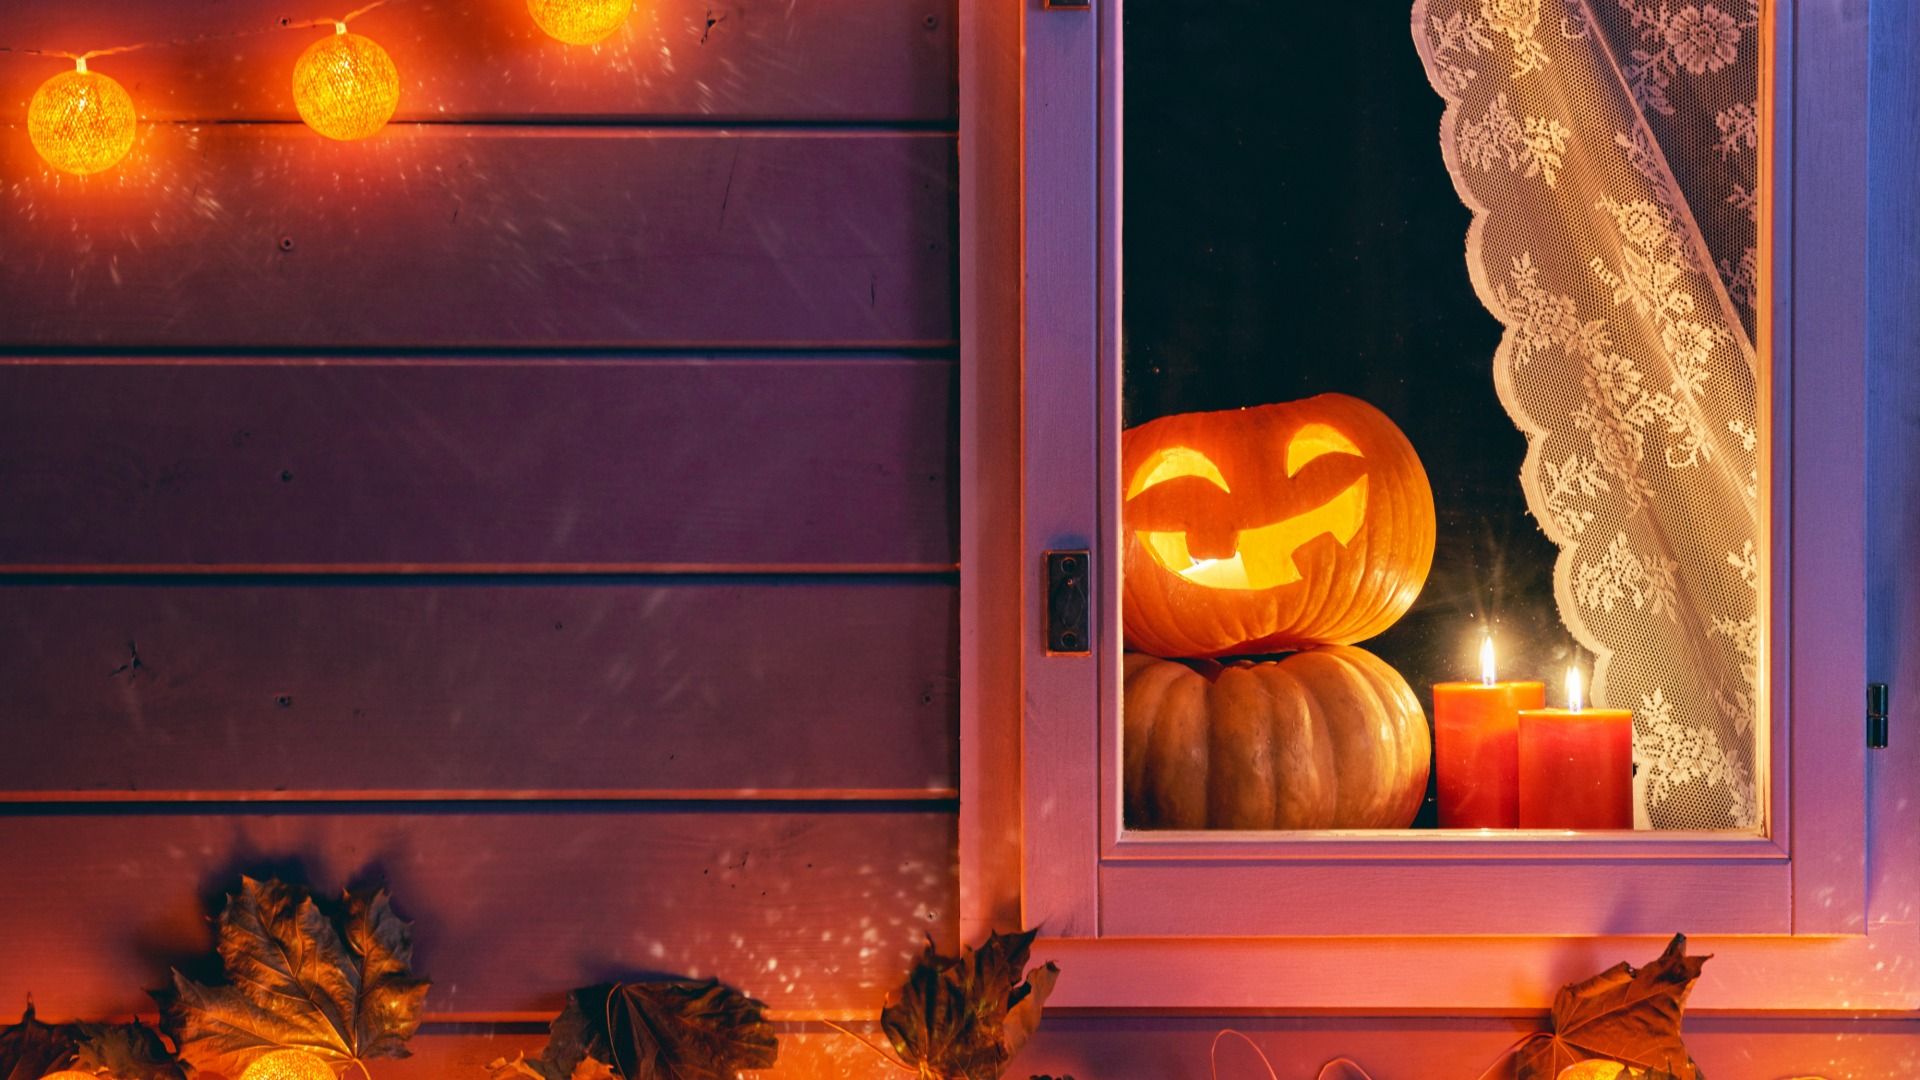 Download Wallpaper autumn, night, window, Halloween, pumpkin, Halloween, autumn, pumpk. Pumpkin wallpaper, Halloween wallpaper background, Scary halloween image